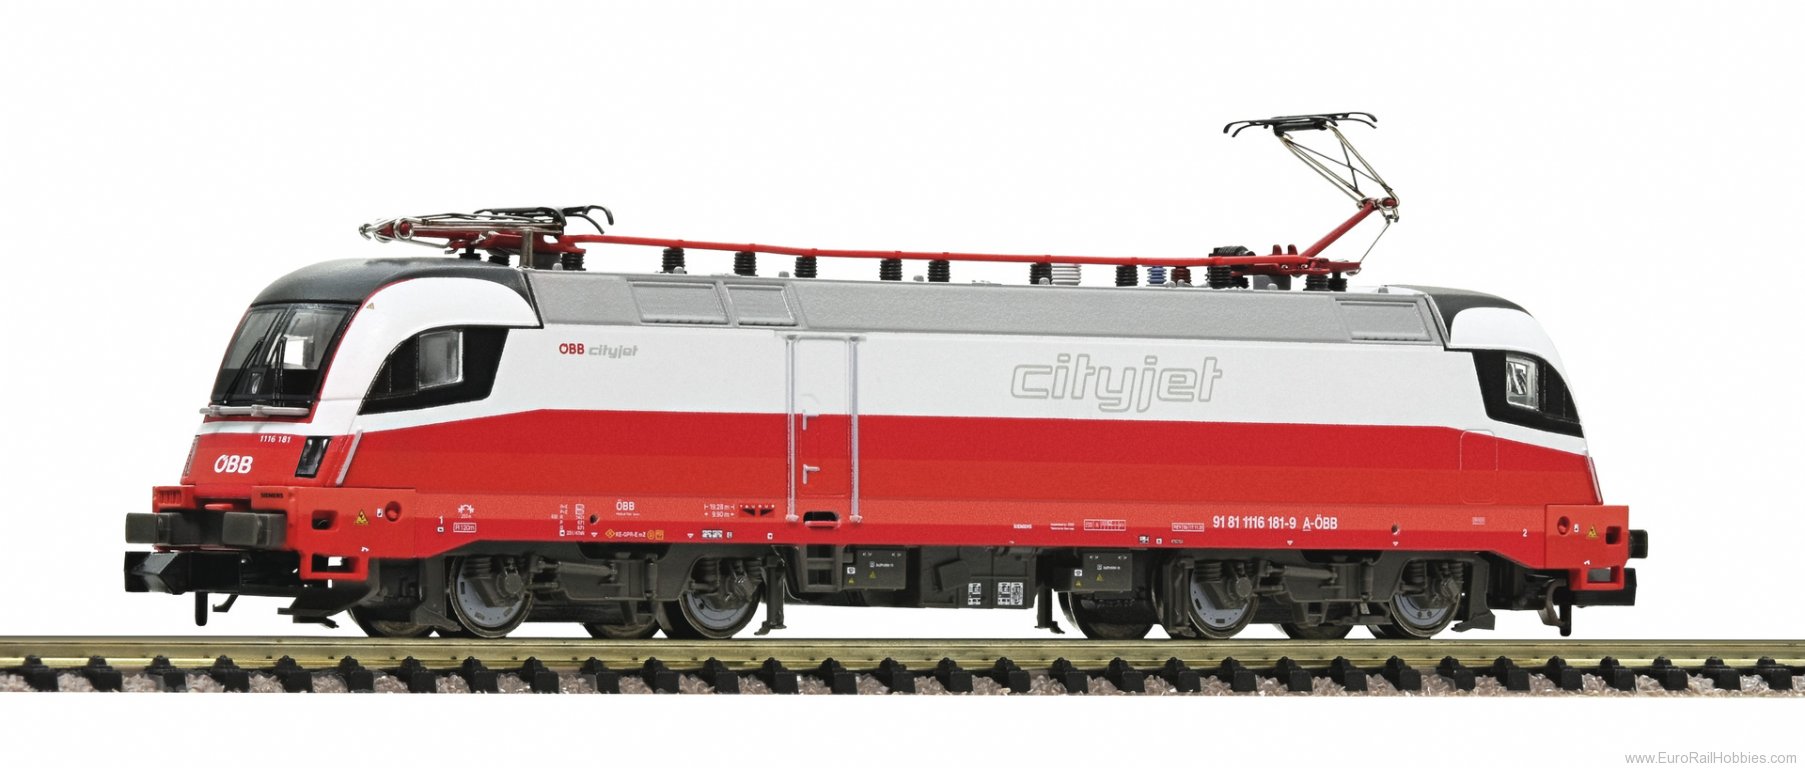 Fleischmann 7560016 Electric locomotive 1116 181-9 ÃBB 